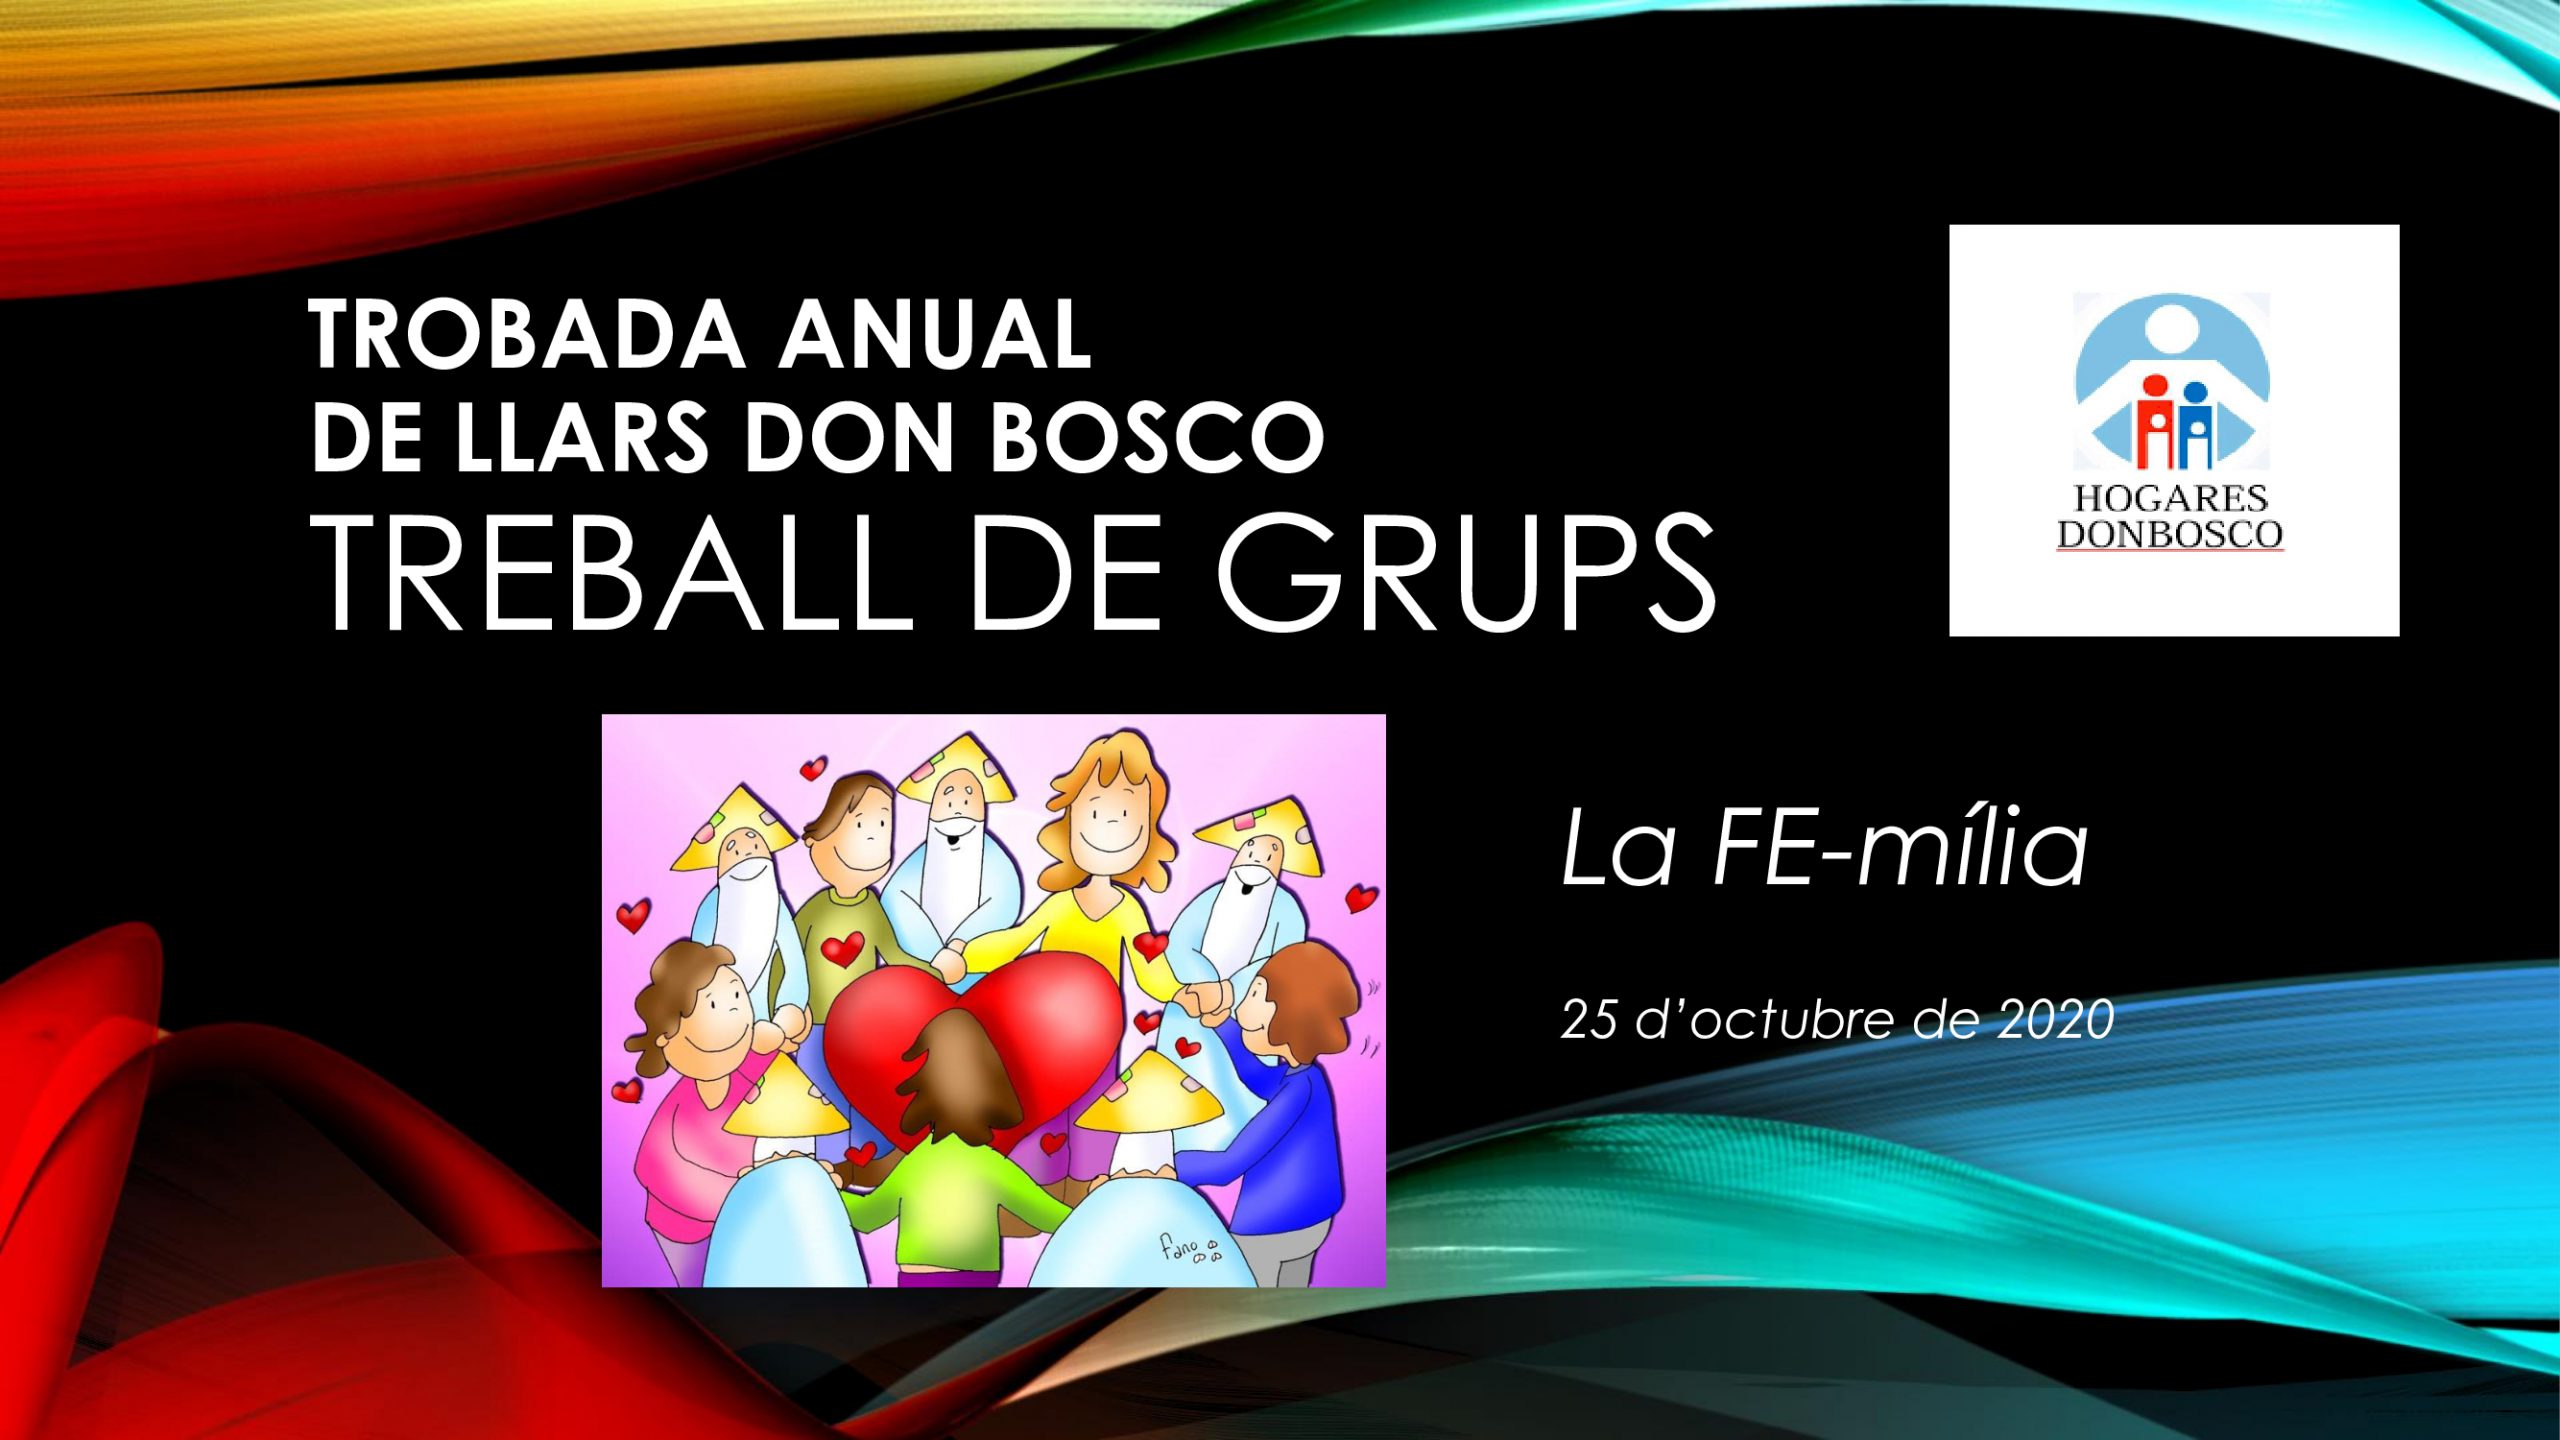 Trobada anual Llars Don Bosco / Tema anual curs 2020-21 “FE-MALIA”